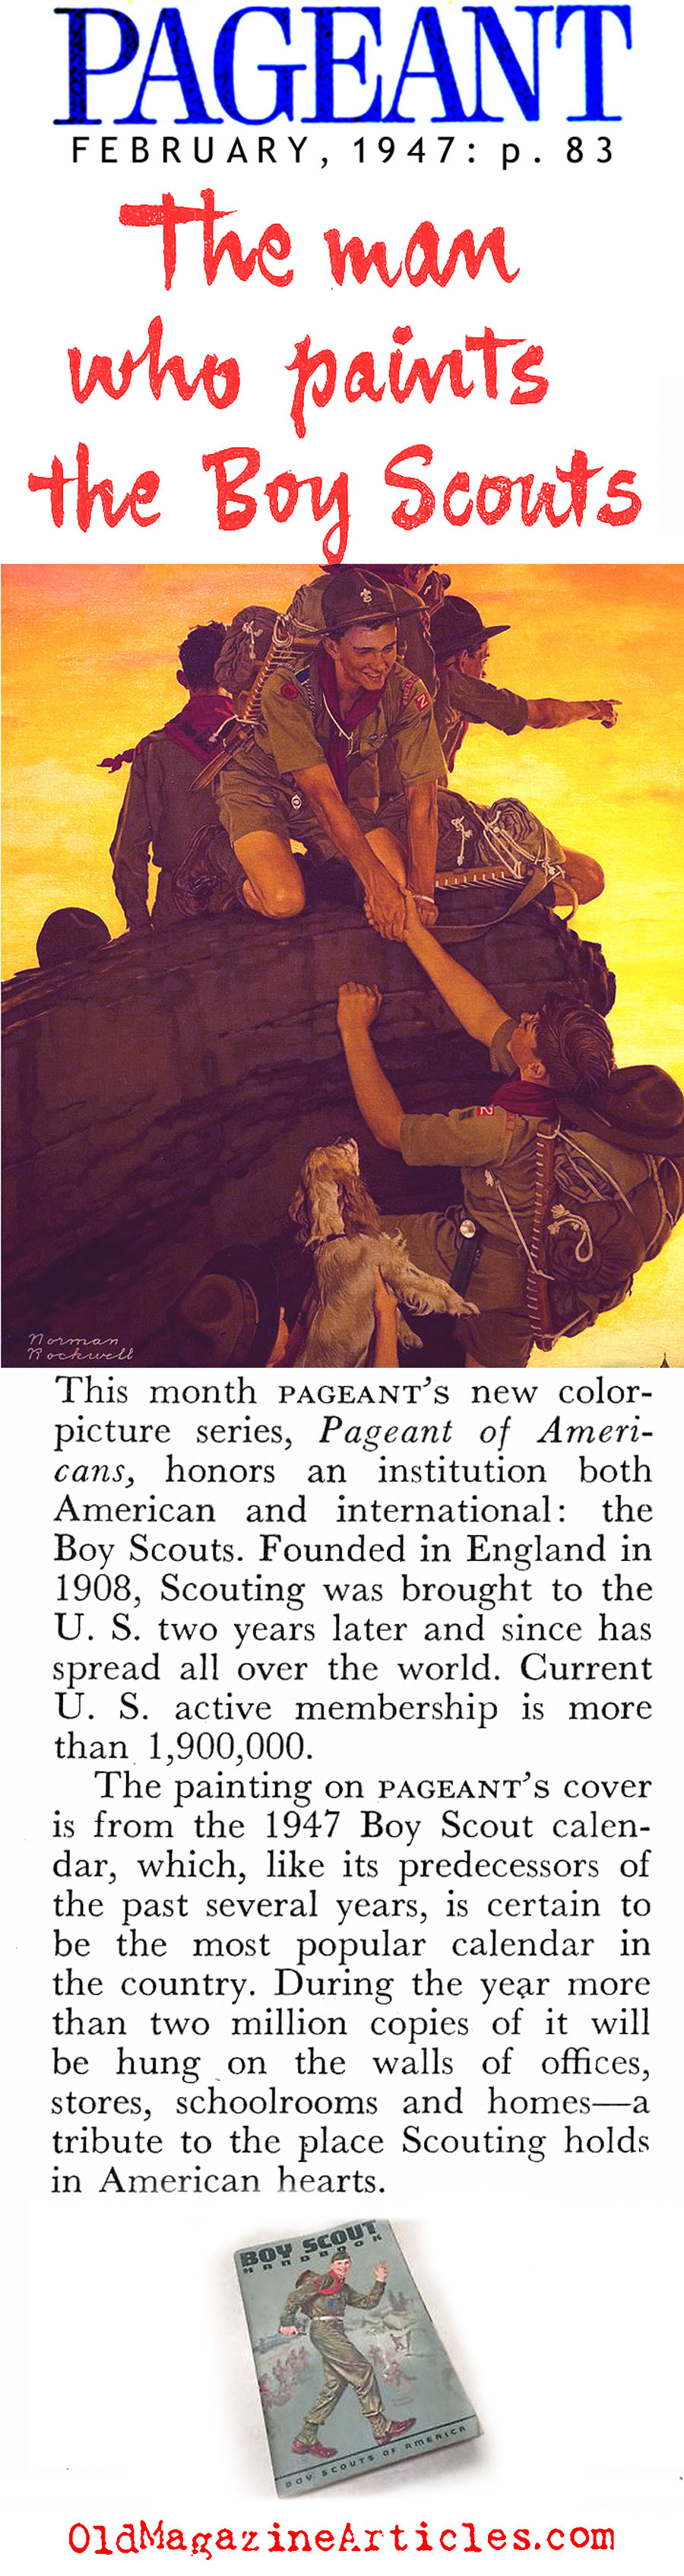 America's Favorite Illustrator (Pageant Magazine, 1947)